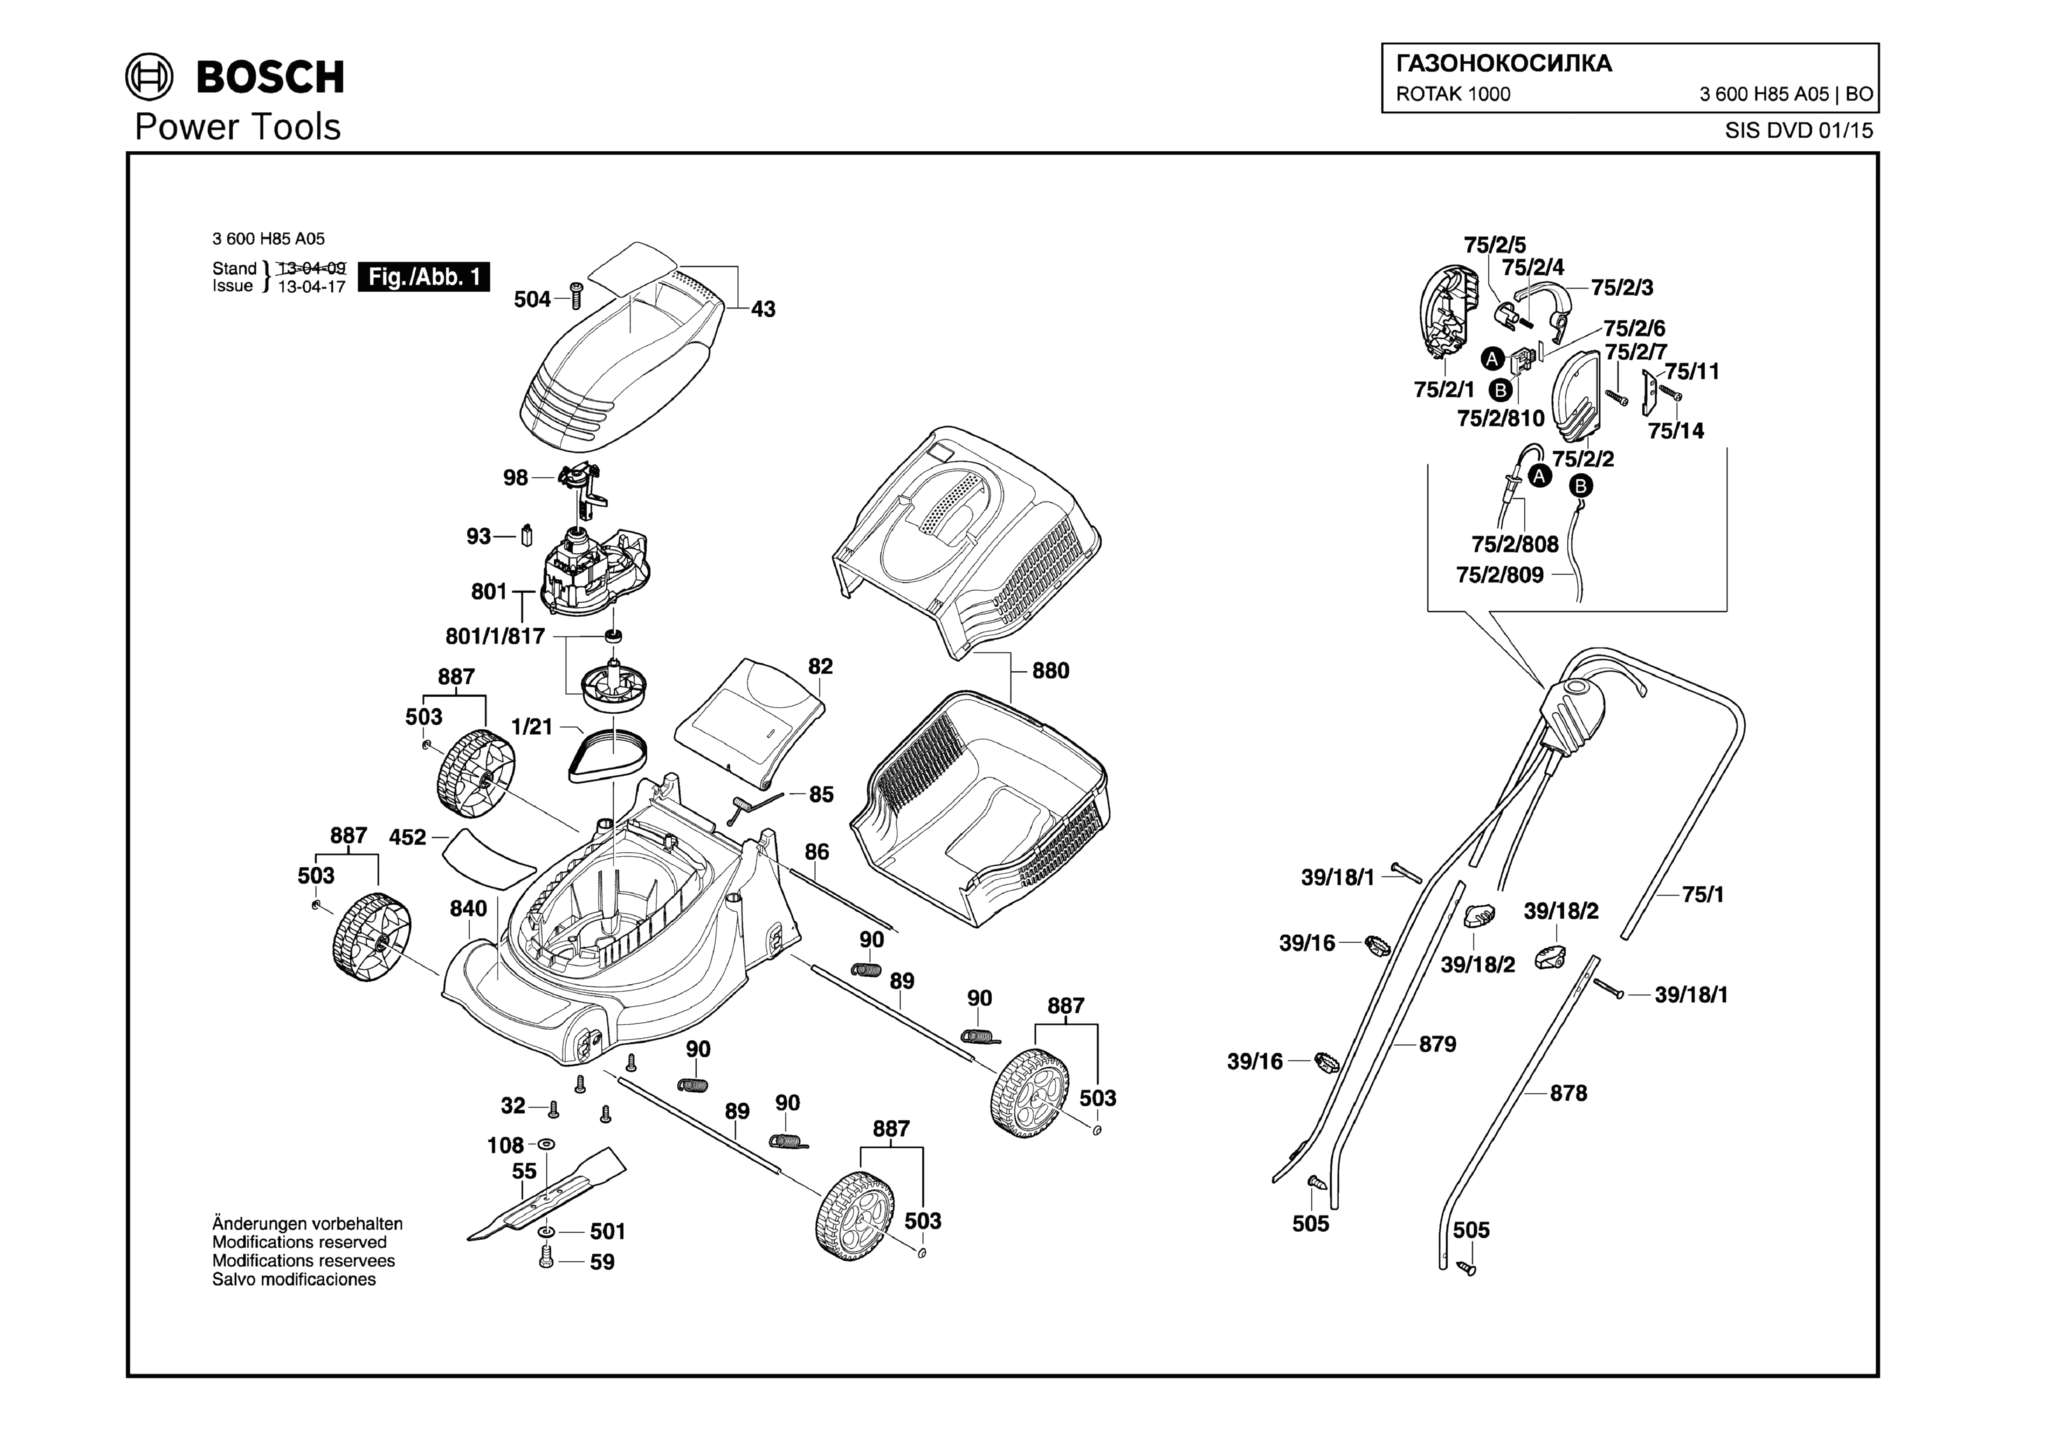 Запчасти, схема и деталировка Bosch ROTAK 1000 (ТИП 3600H85A05)